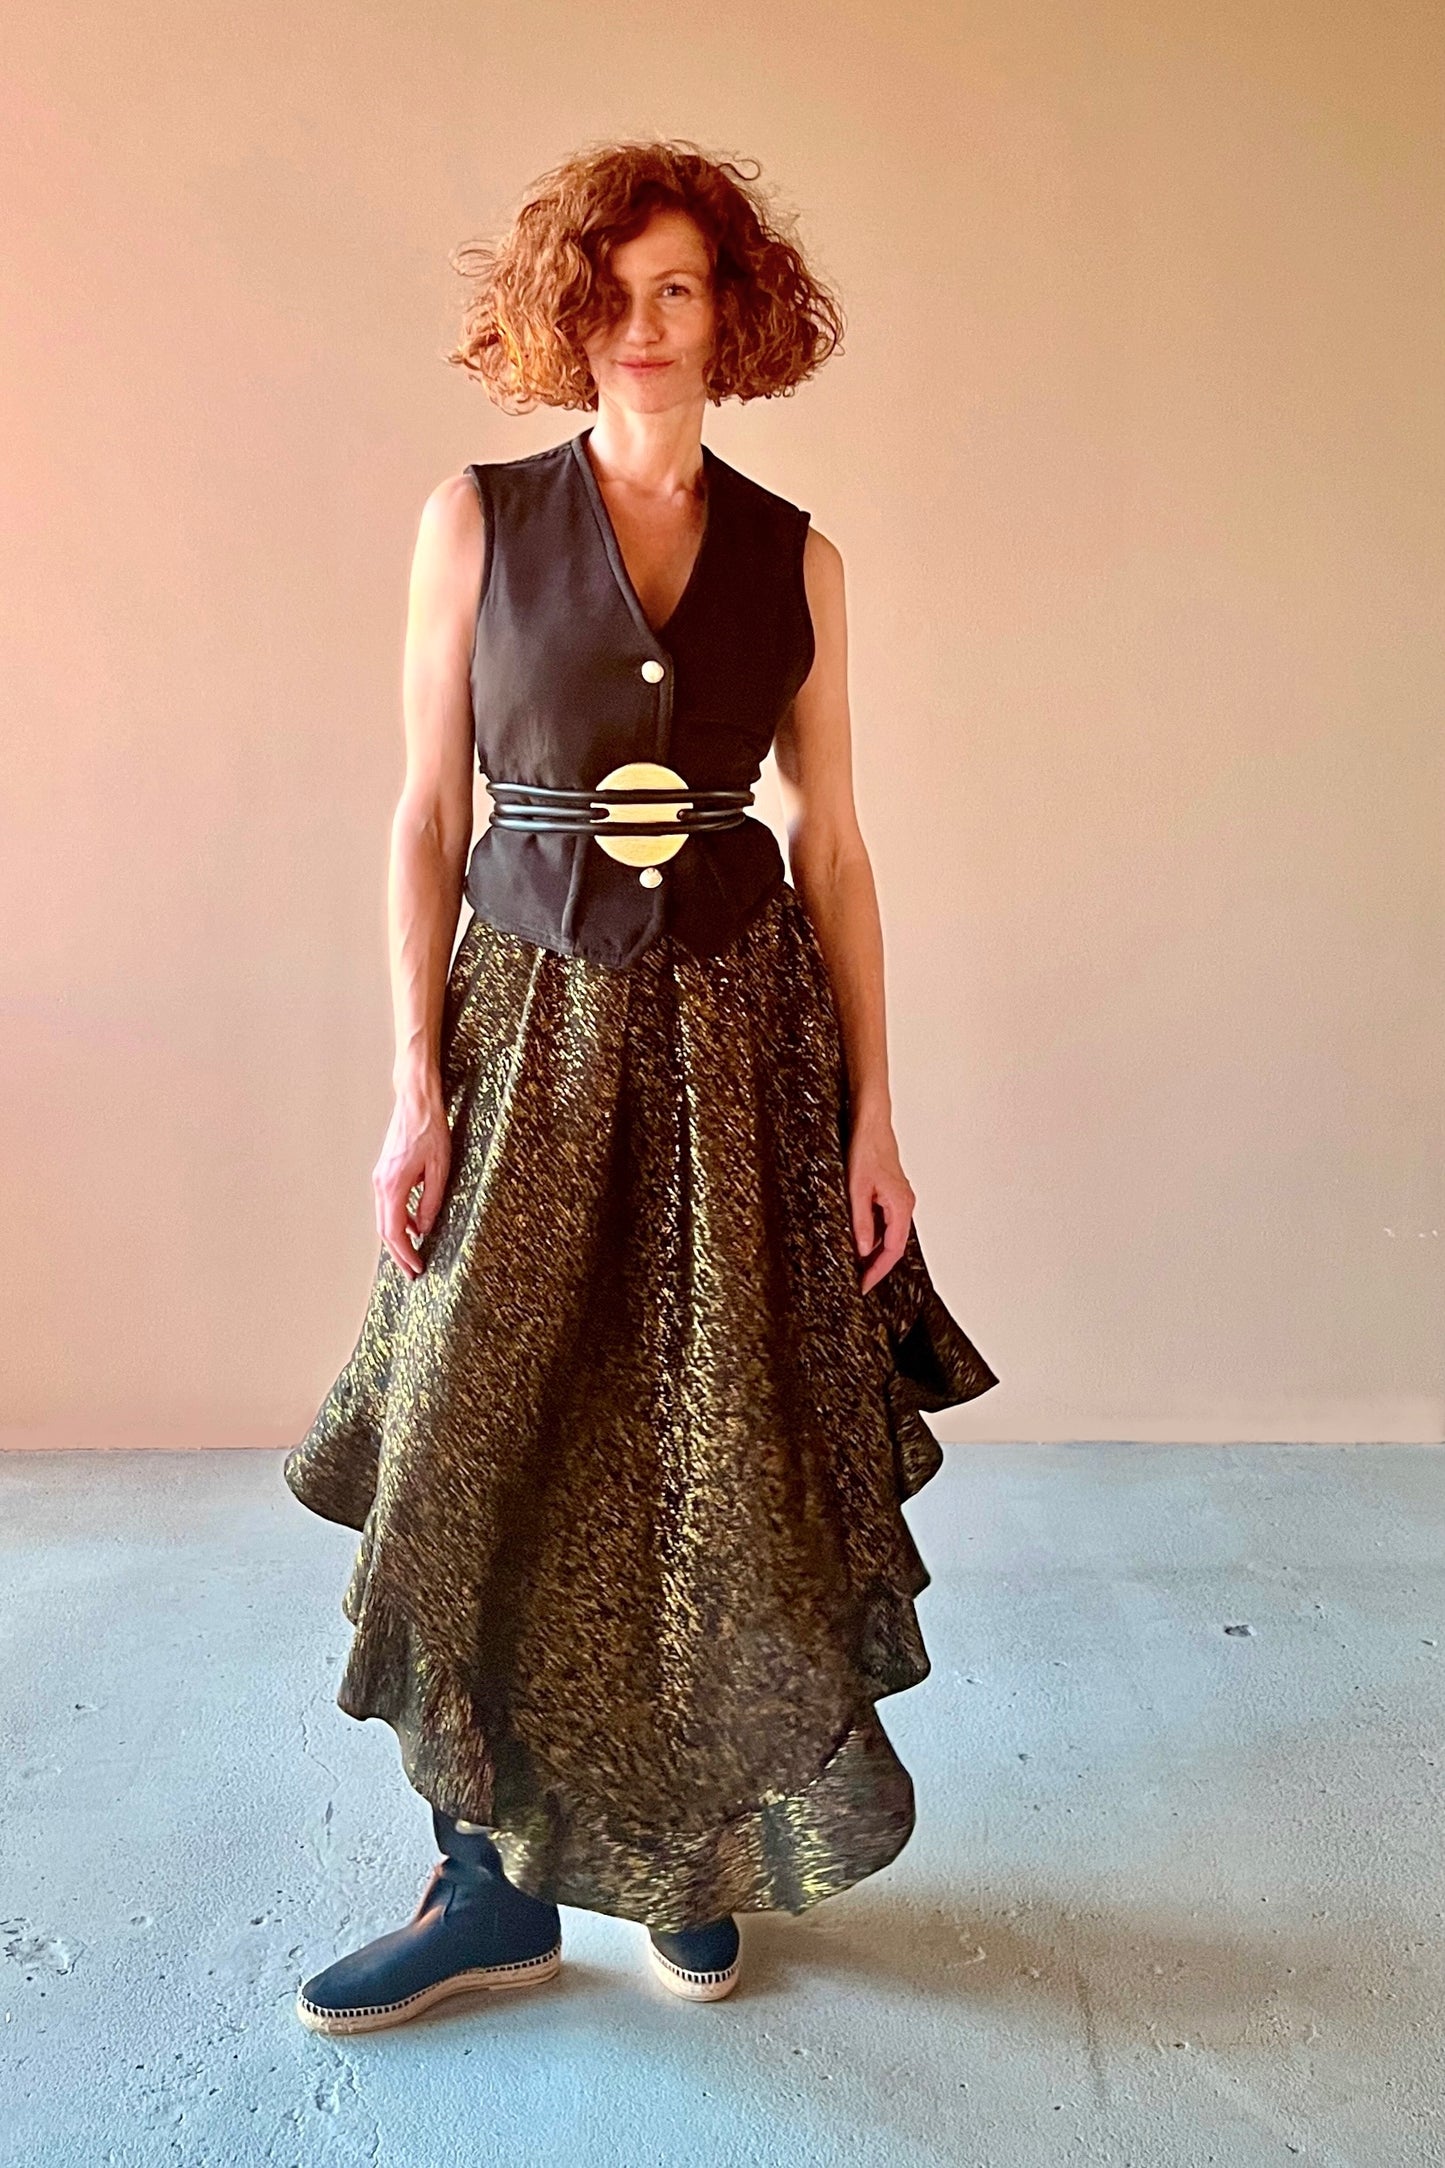 Cabriolet Ruffle Skirt/Dress in Black Onyx Metallic Gold Raw Silk